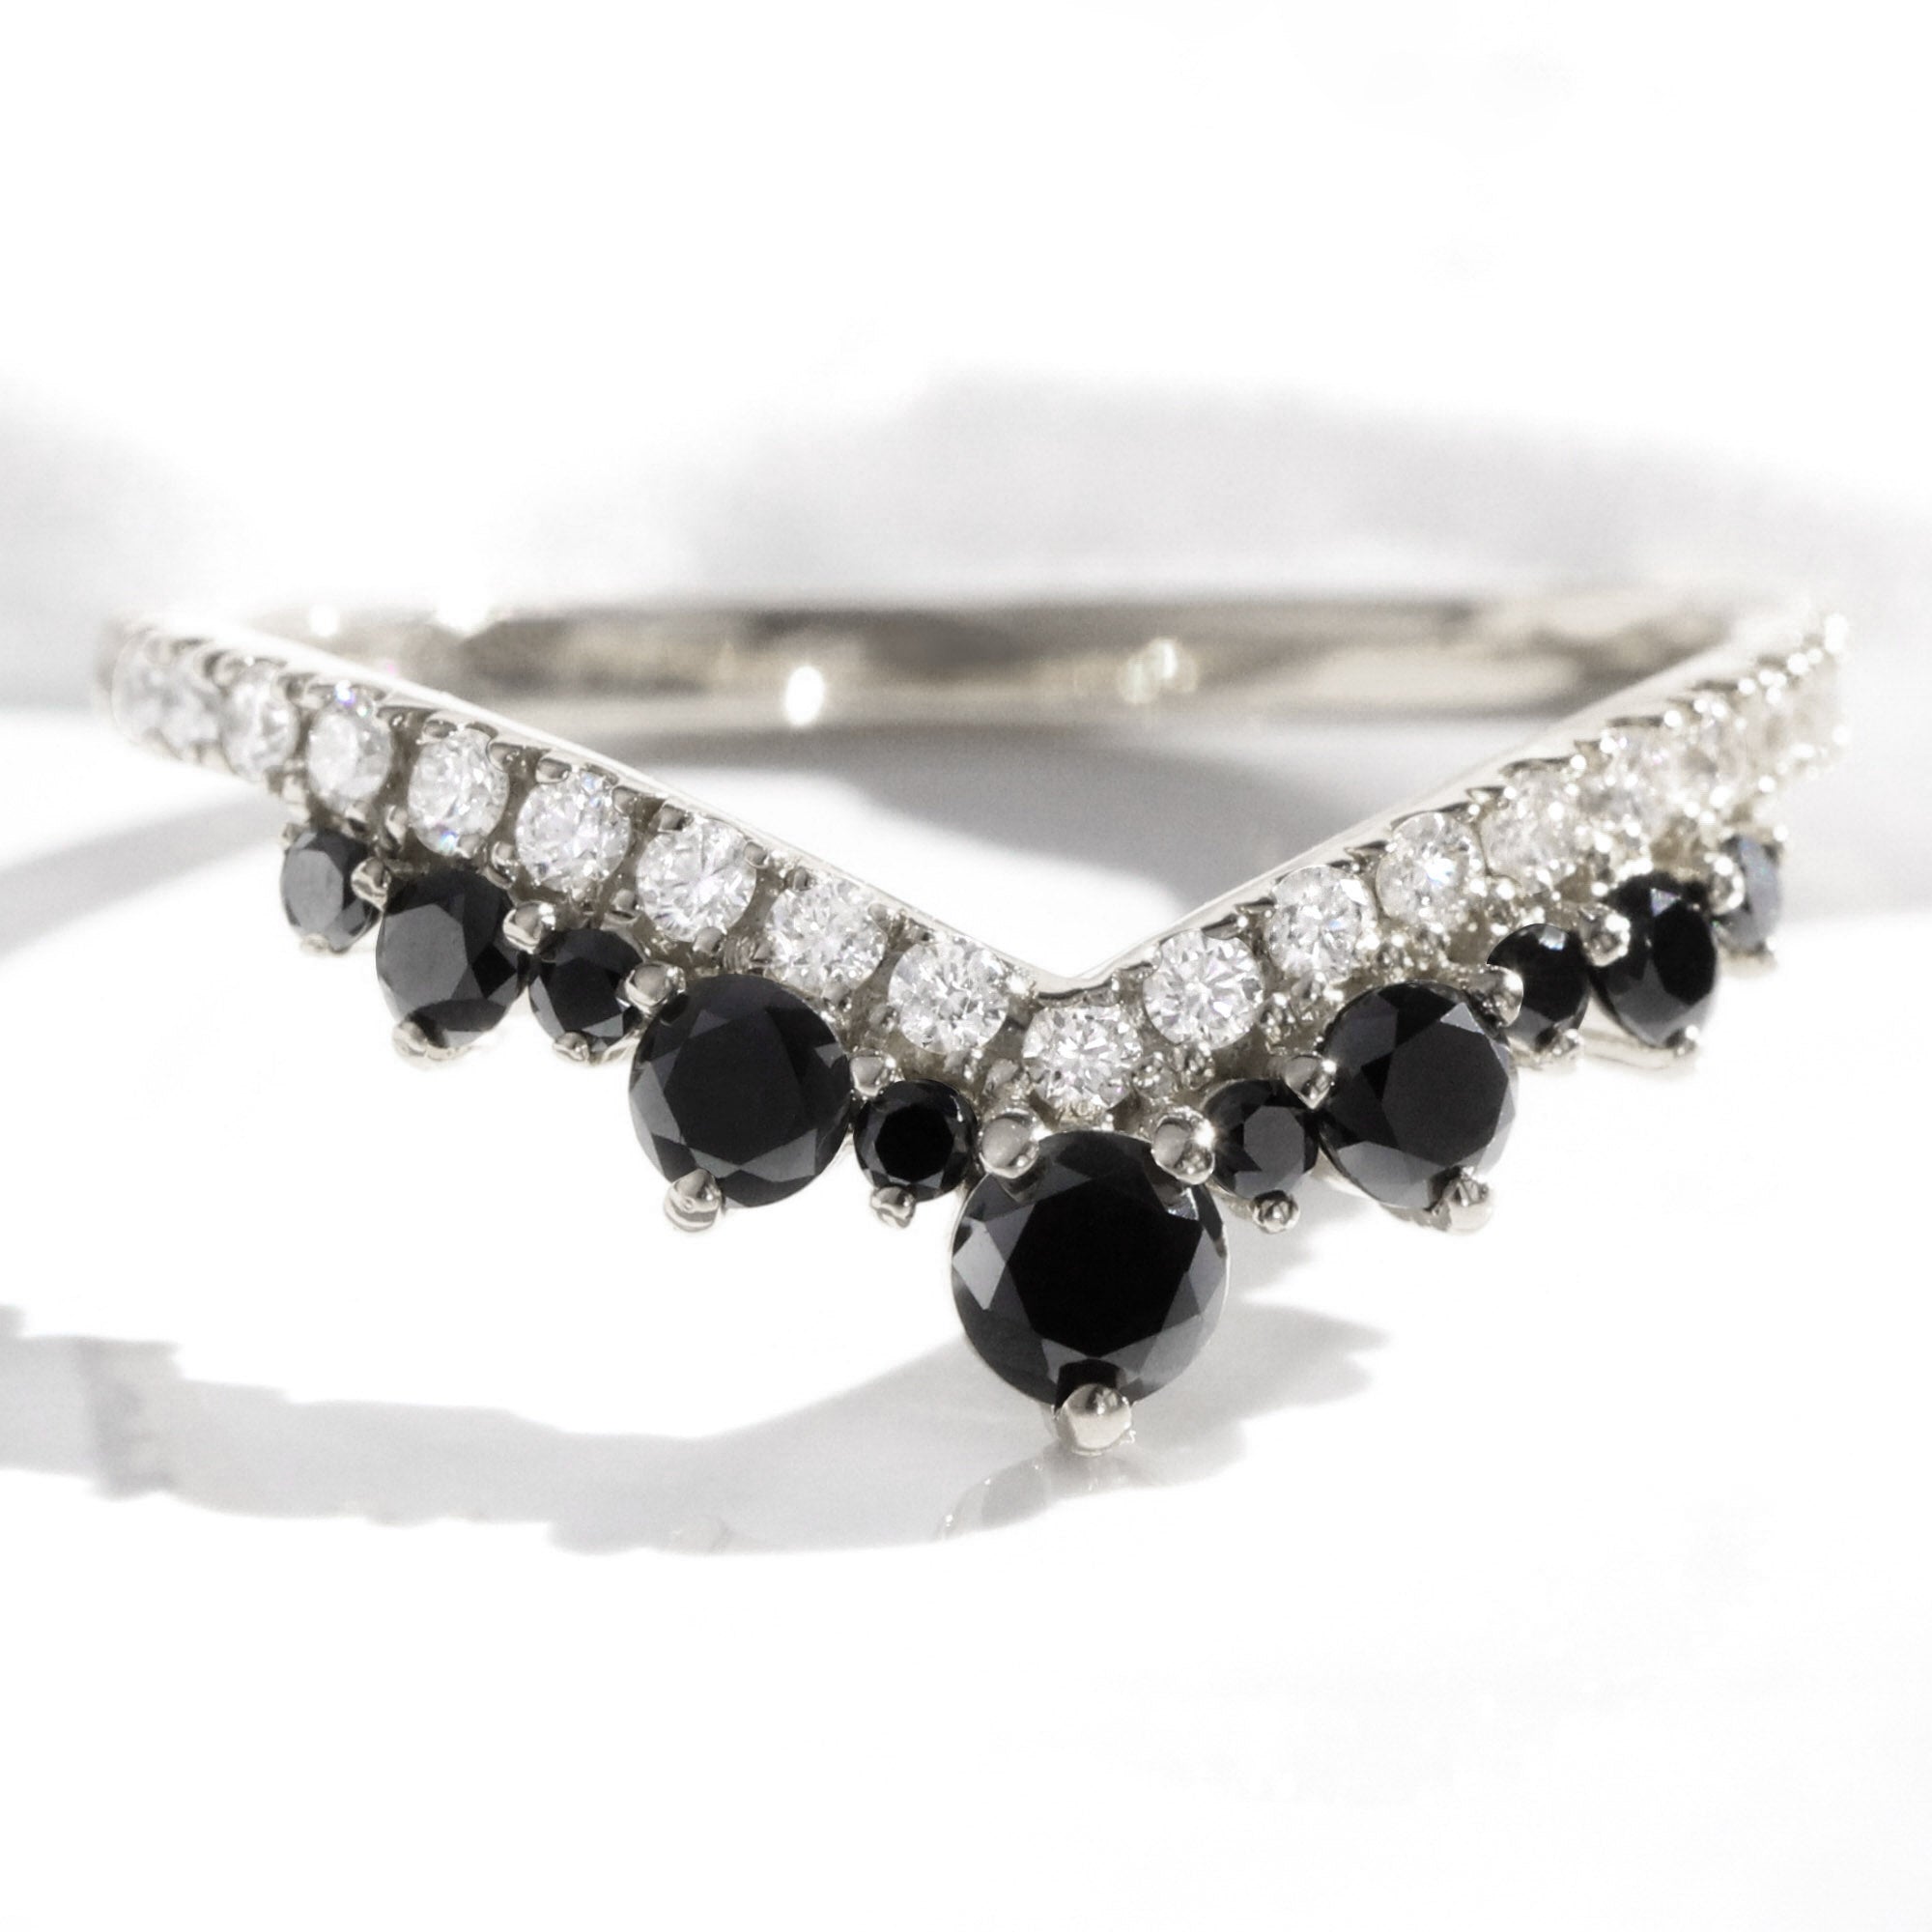 White and black diamond wedding ring white gold curved V diamond band la more design jewelry